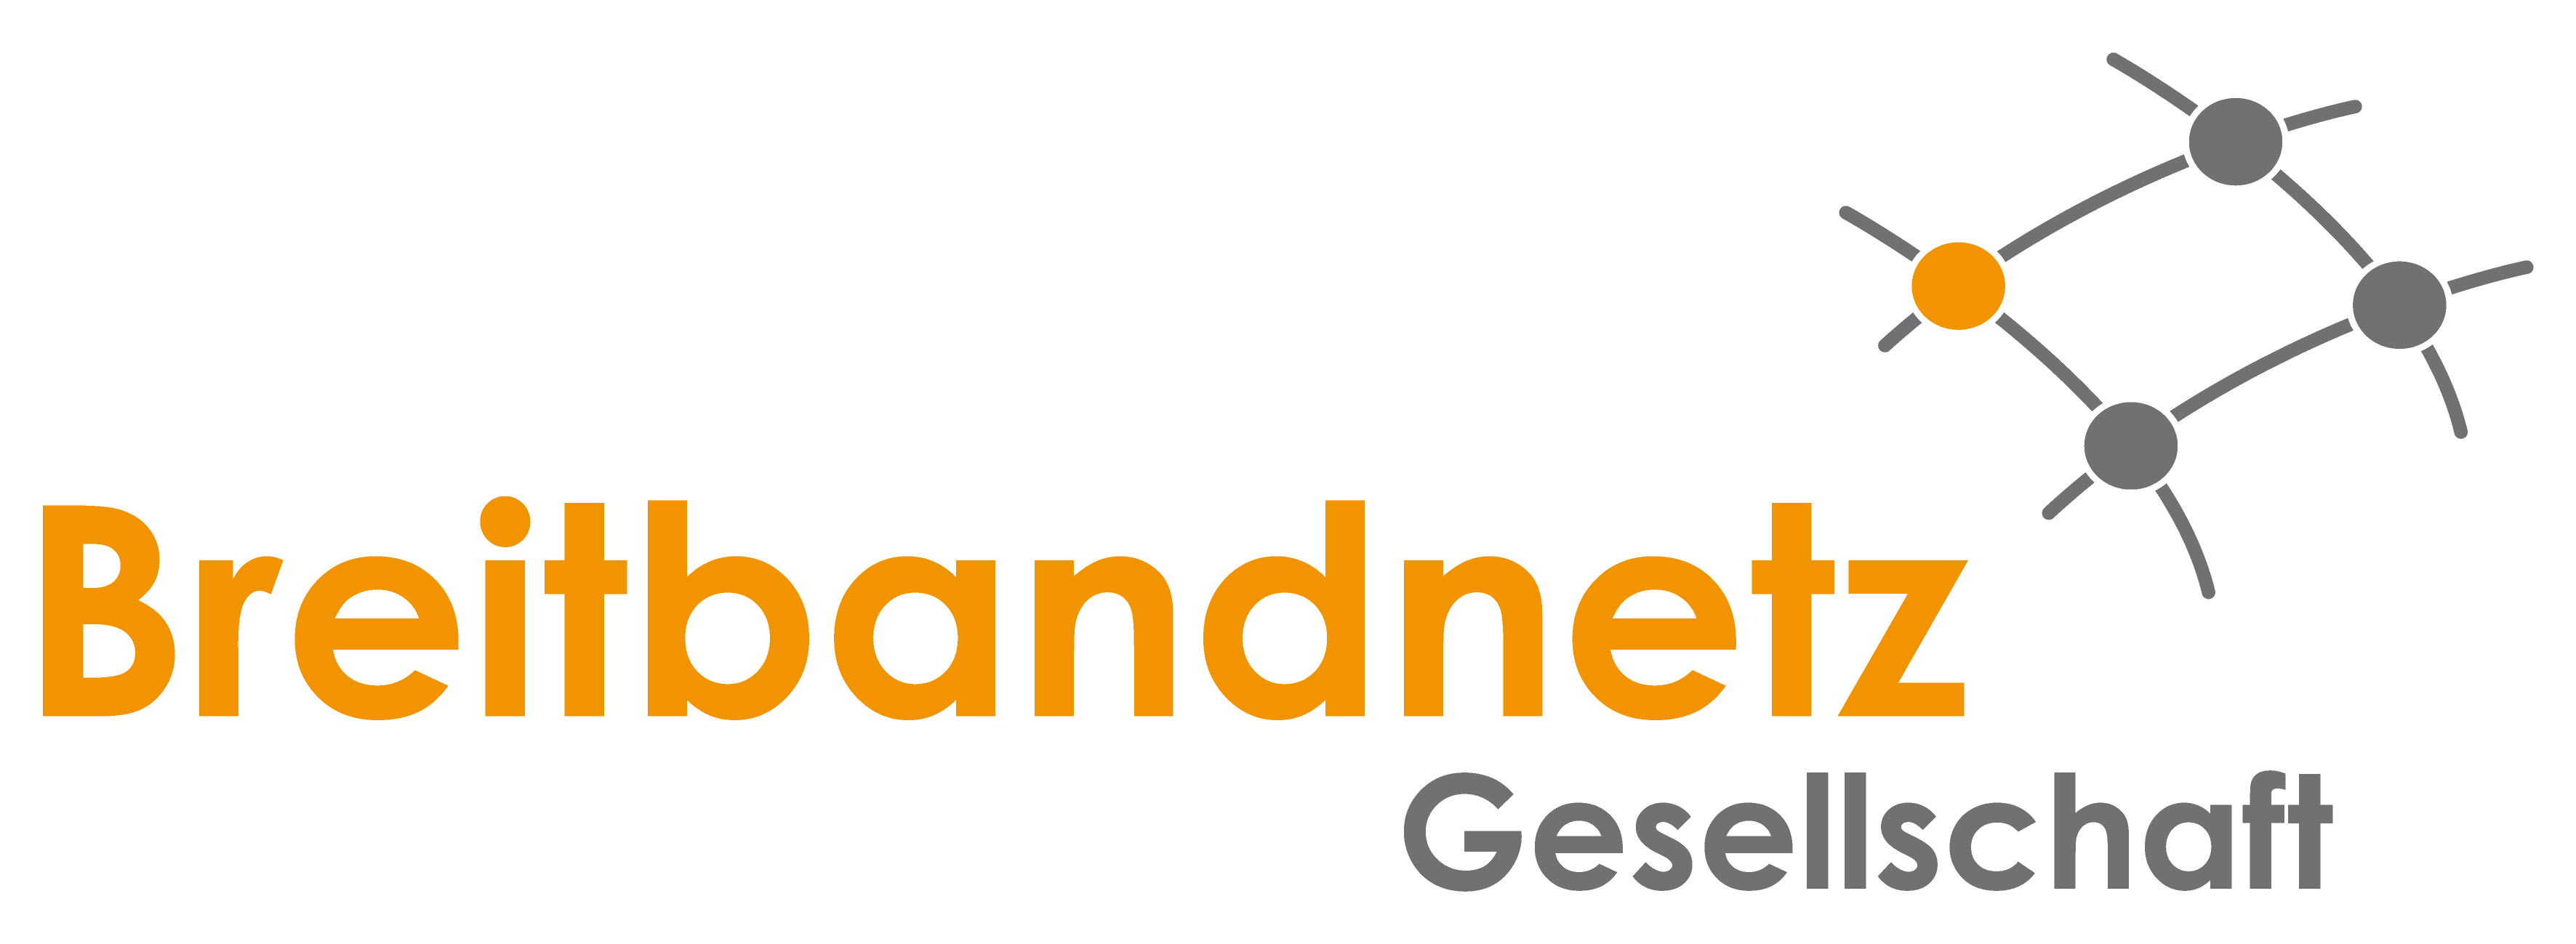 Logo Breitbandnetz Gesellschaft transparent